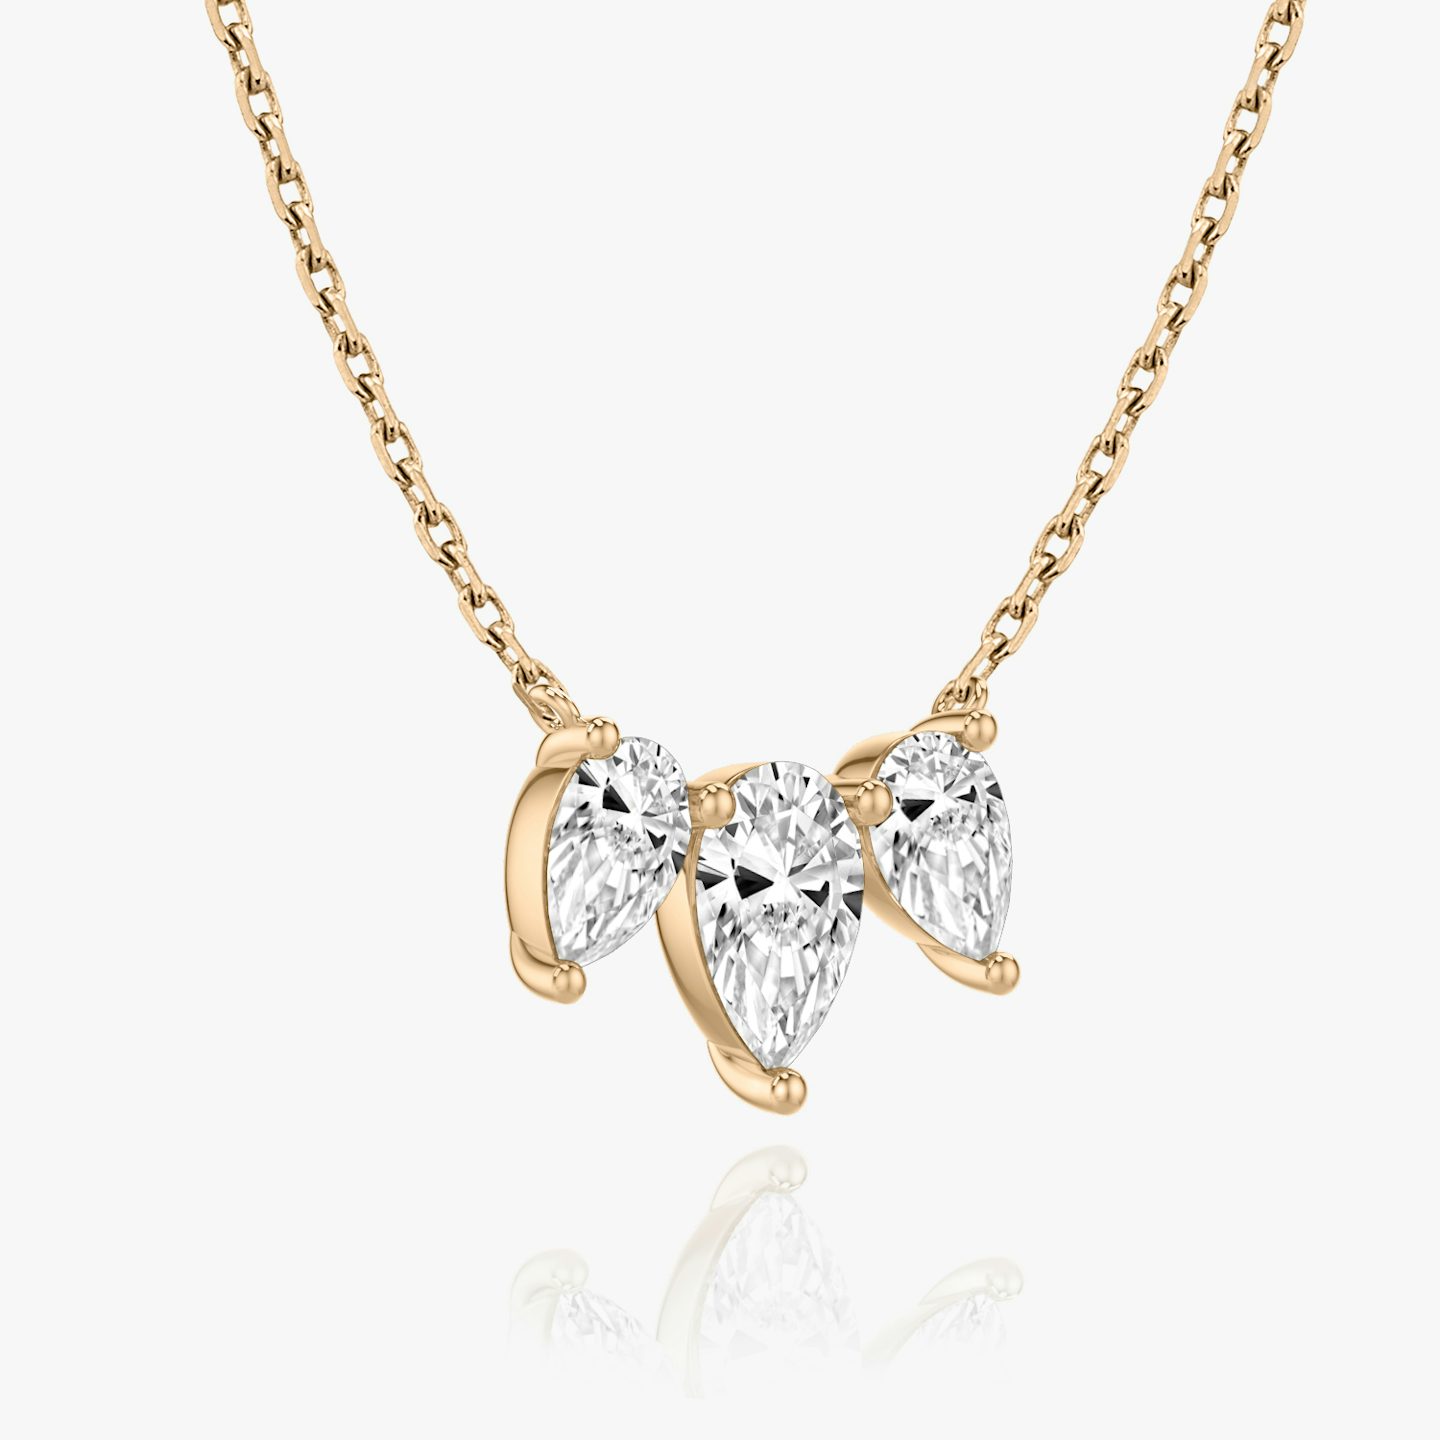 Arc Necklace | Pear | 14k | Rose Gold | diamondCount: 3 | diamondSize: large | chainLength: 16-18